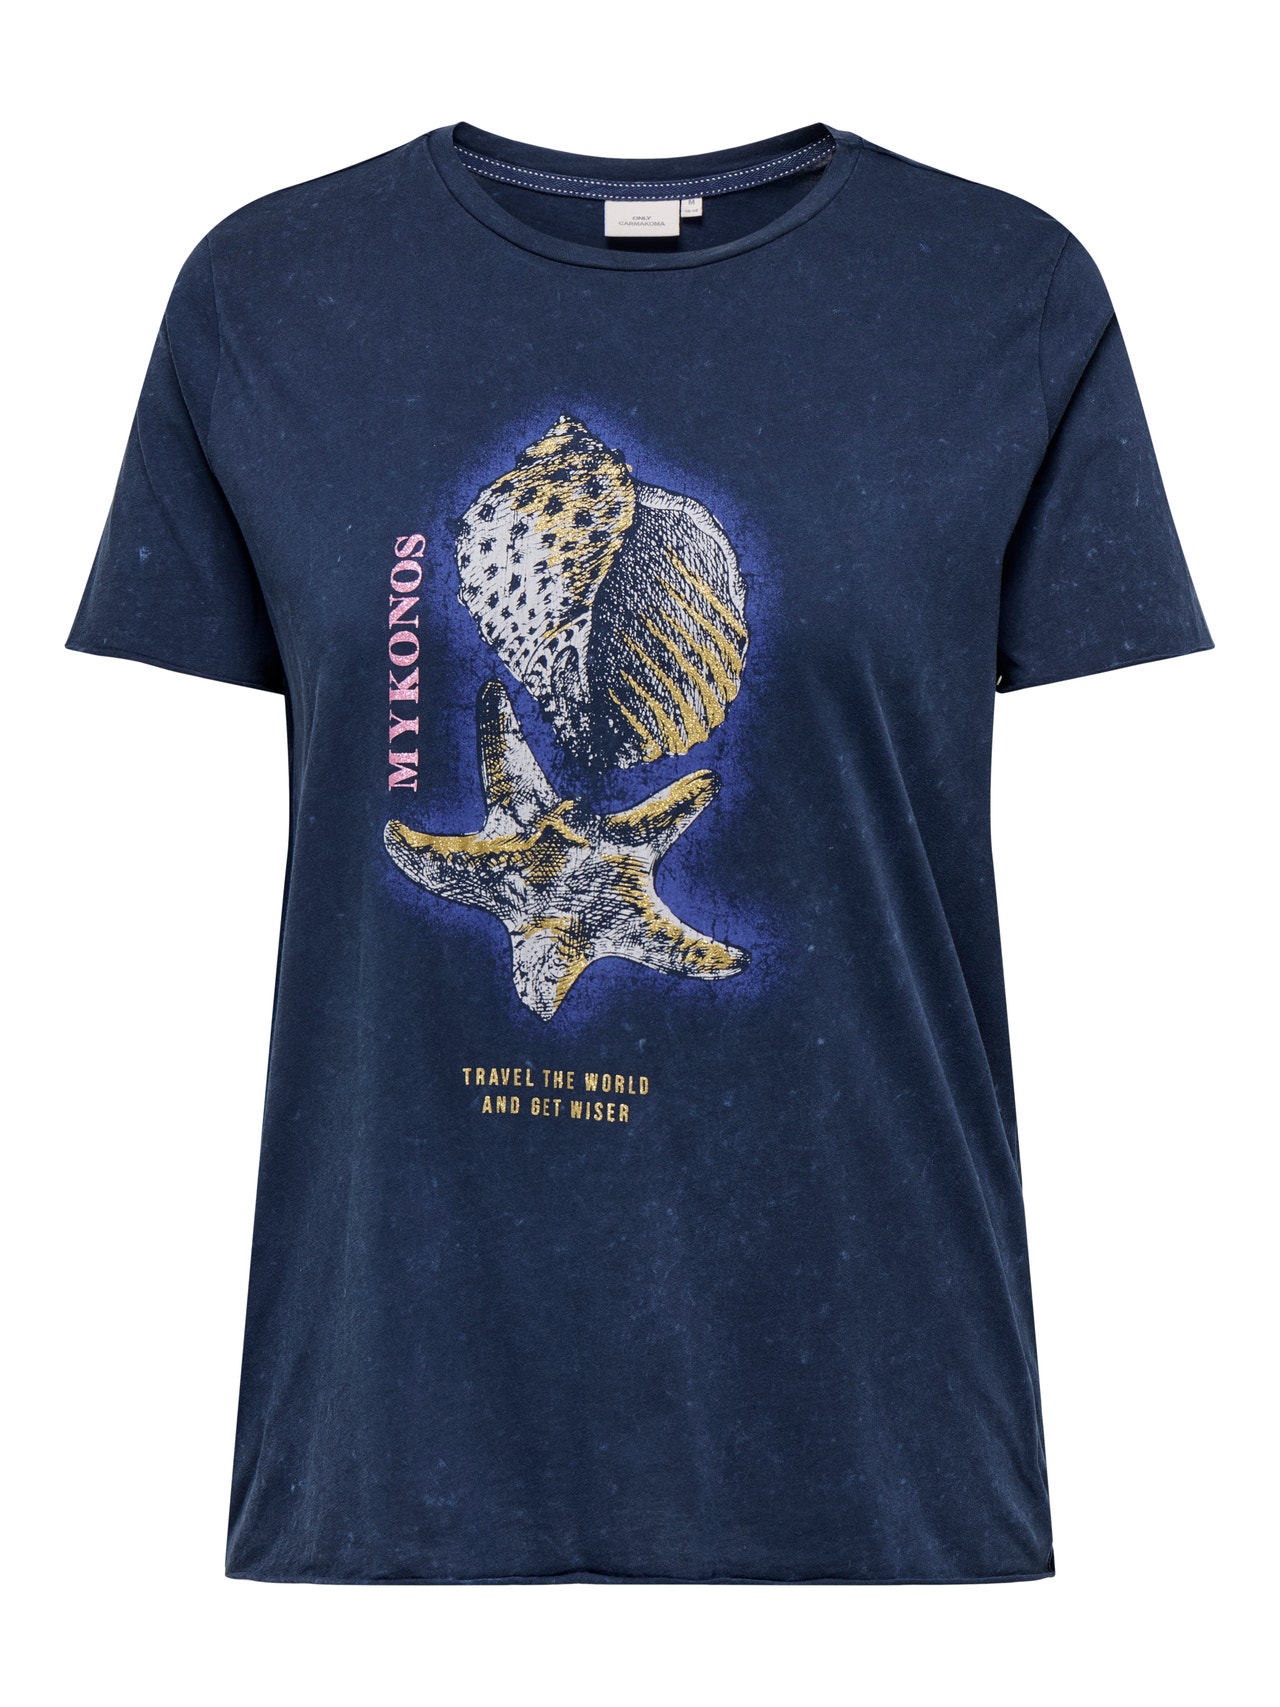 ONLY Camisetas Corte regular Cuello redondo -Naval Academy - 15323317